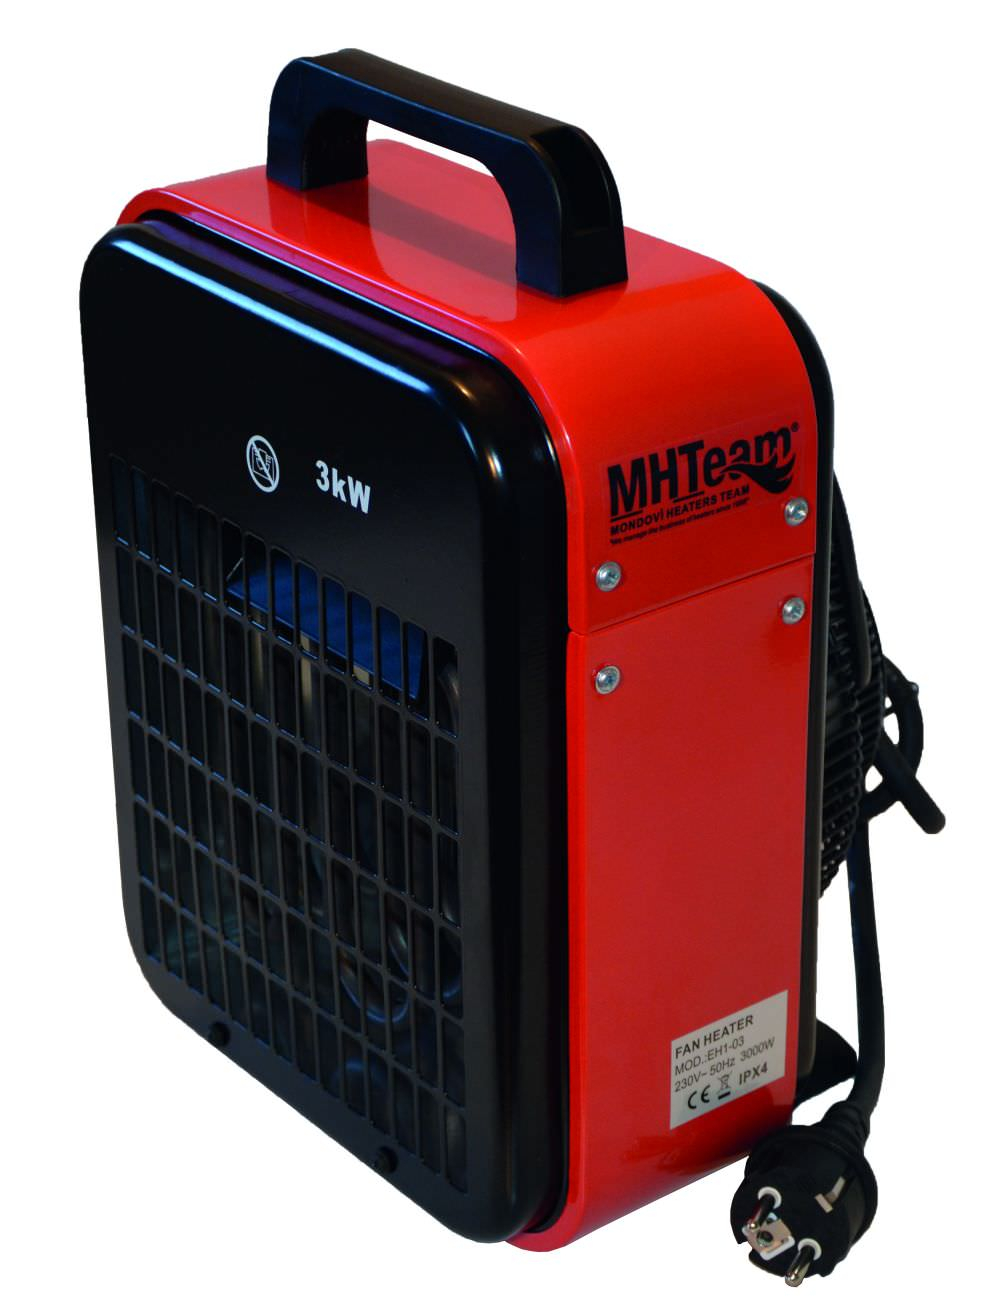 High Efficiency Fan Heater Mhteam 3000w Single Phase Ipx4 within size 1000 X 1300